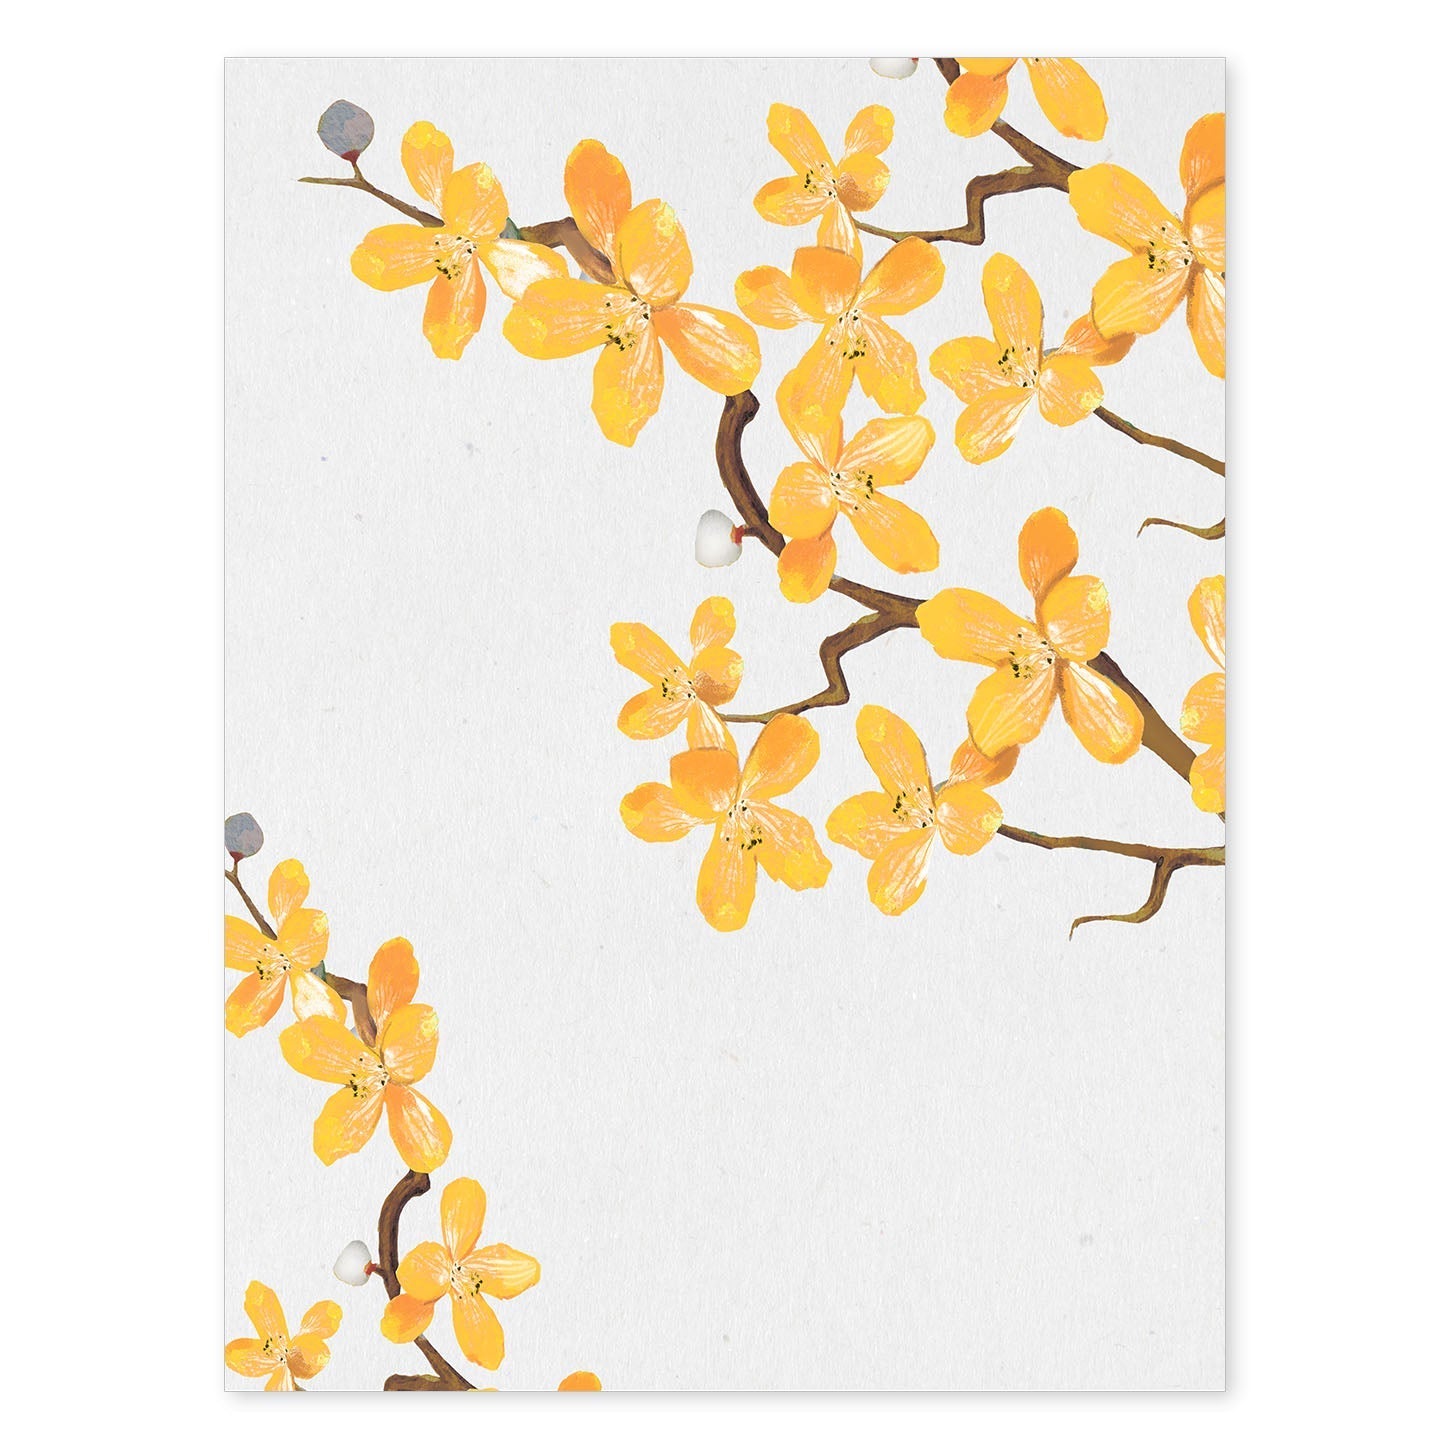 Poster de ramas con estilo de óleo. Lámina Ramas 6, con dibujos pintados de ramas, hojas, y flores.-Artwork-Nacnic-A4-Sin marco-Nacnic Estudio SL